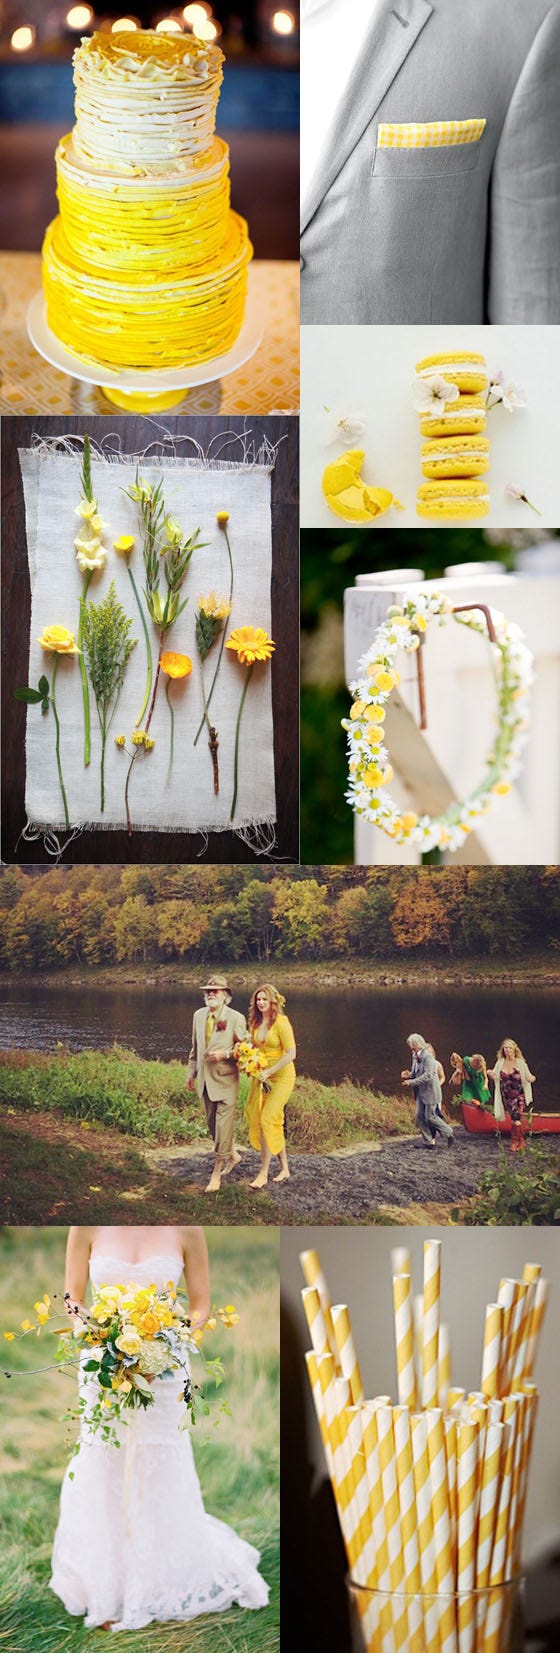 amber tamblyn yellow wedding